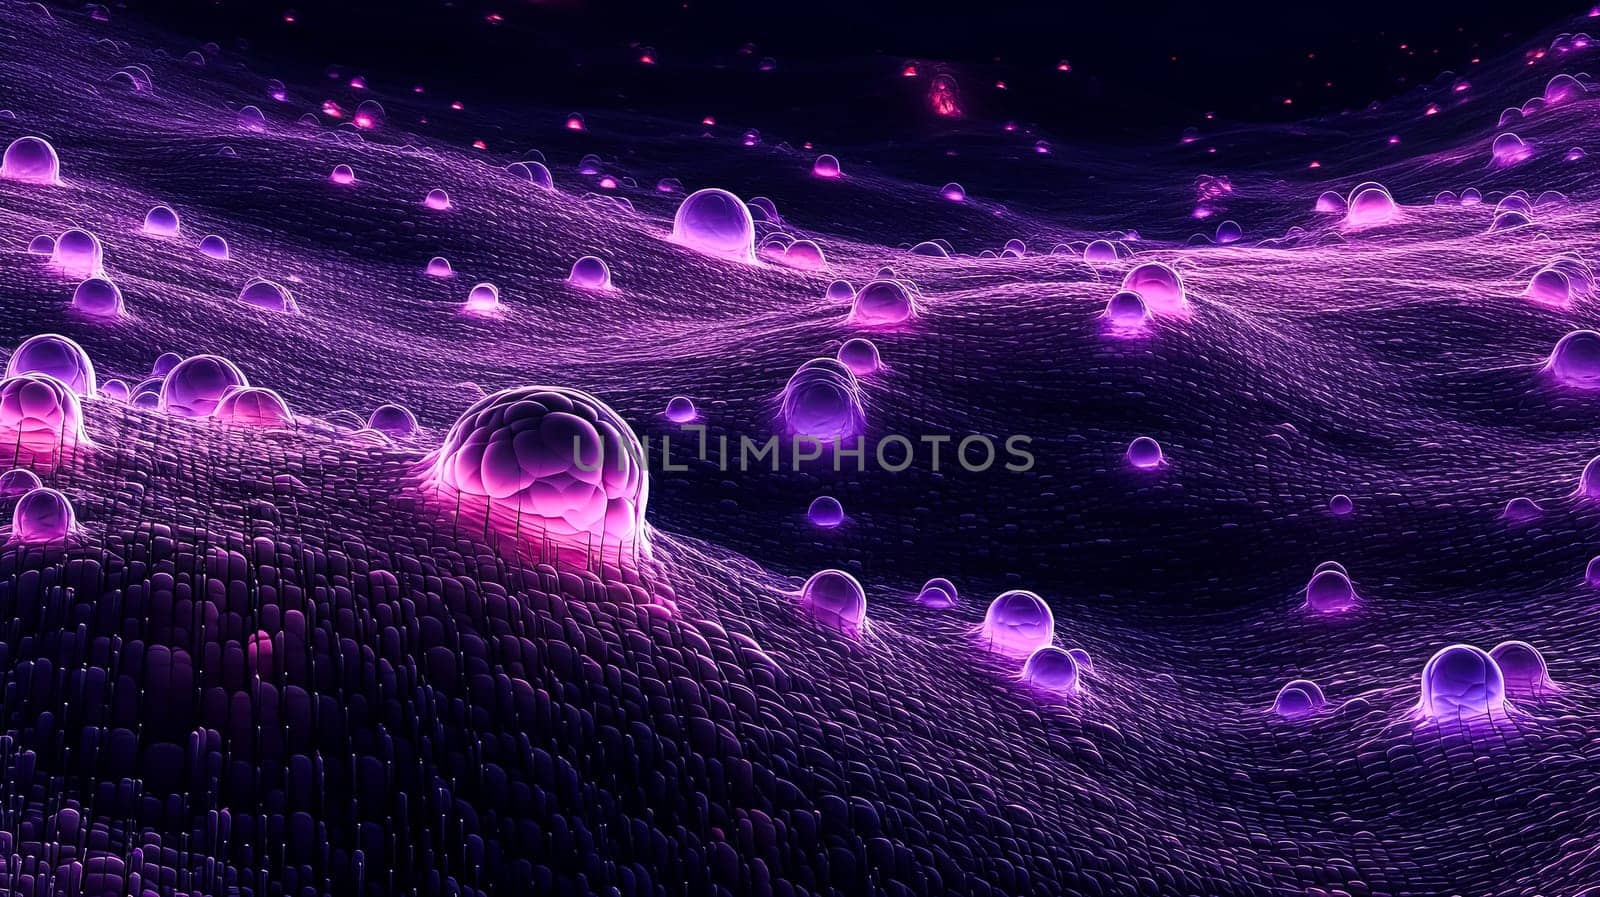 A purple field of glowing orbs by Alla_Morozova93